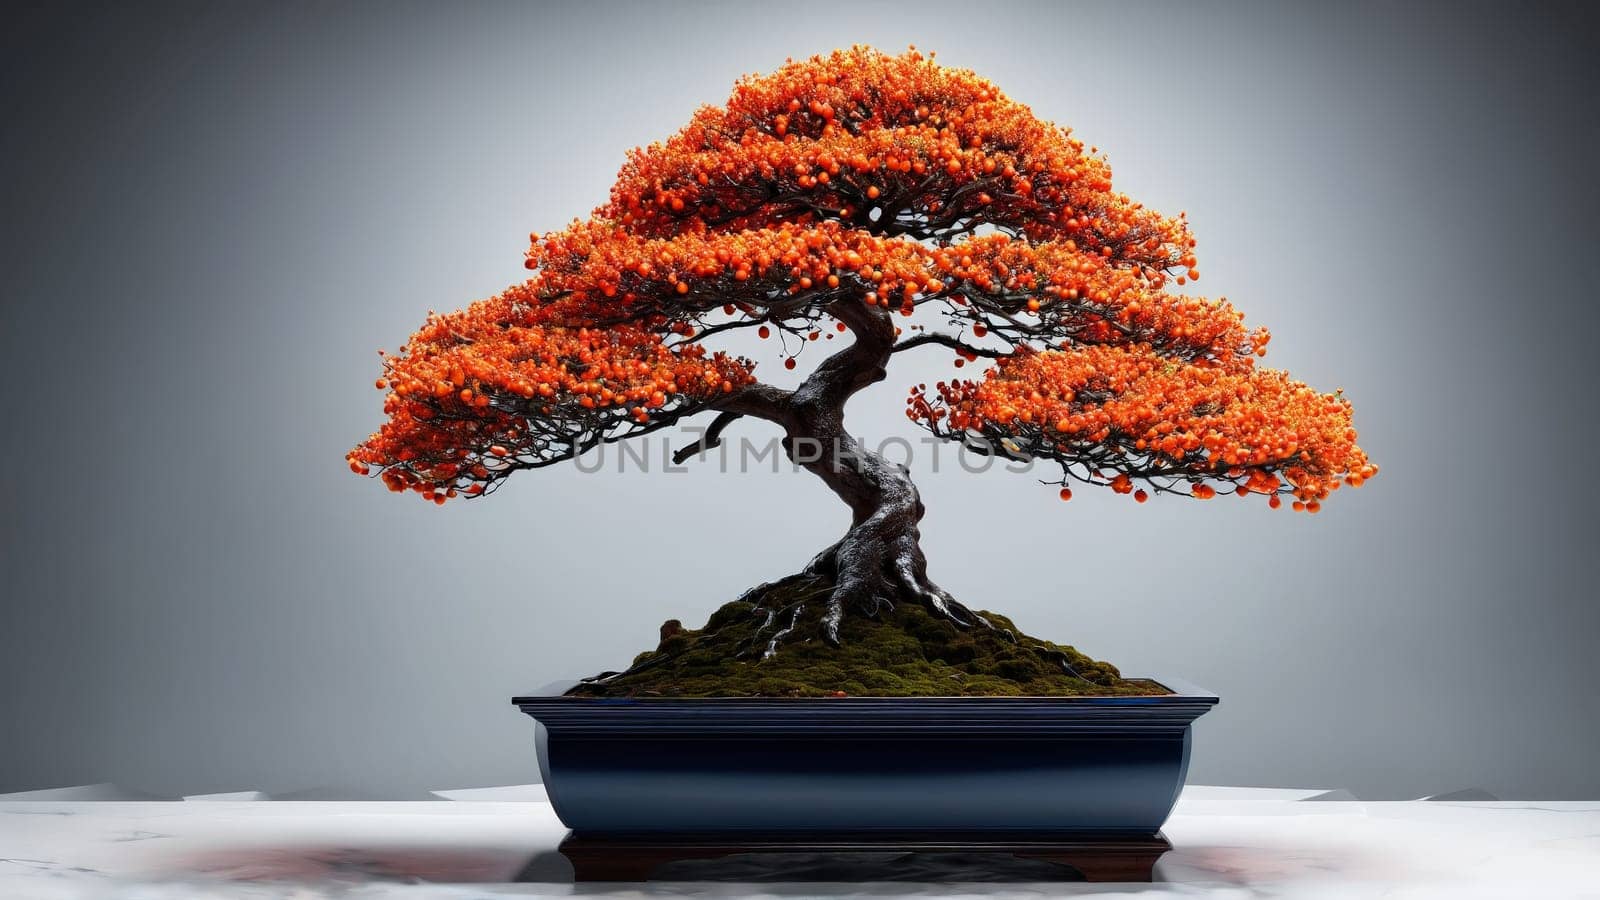 Hardy firethorn bonsai laden with orange berries sleek minimalist lines dramatic rim lighting product visual by panophotograph